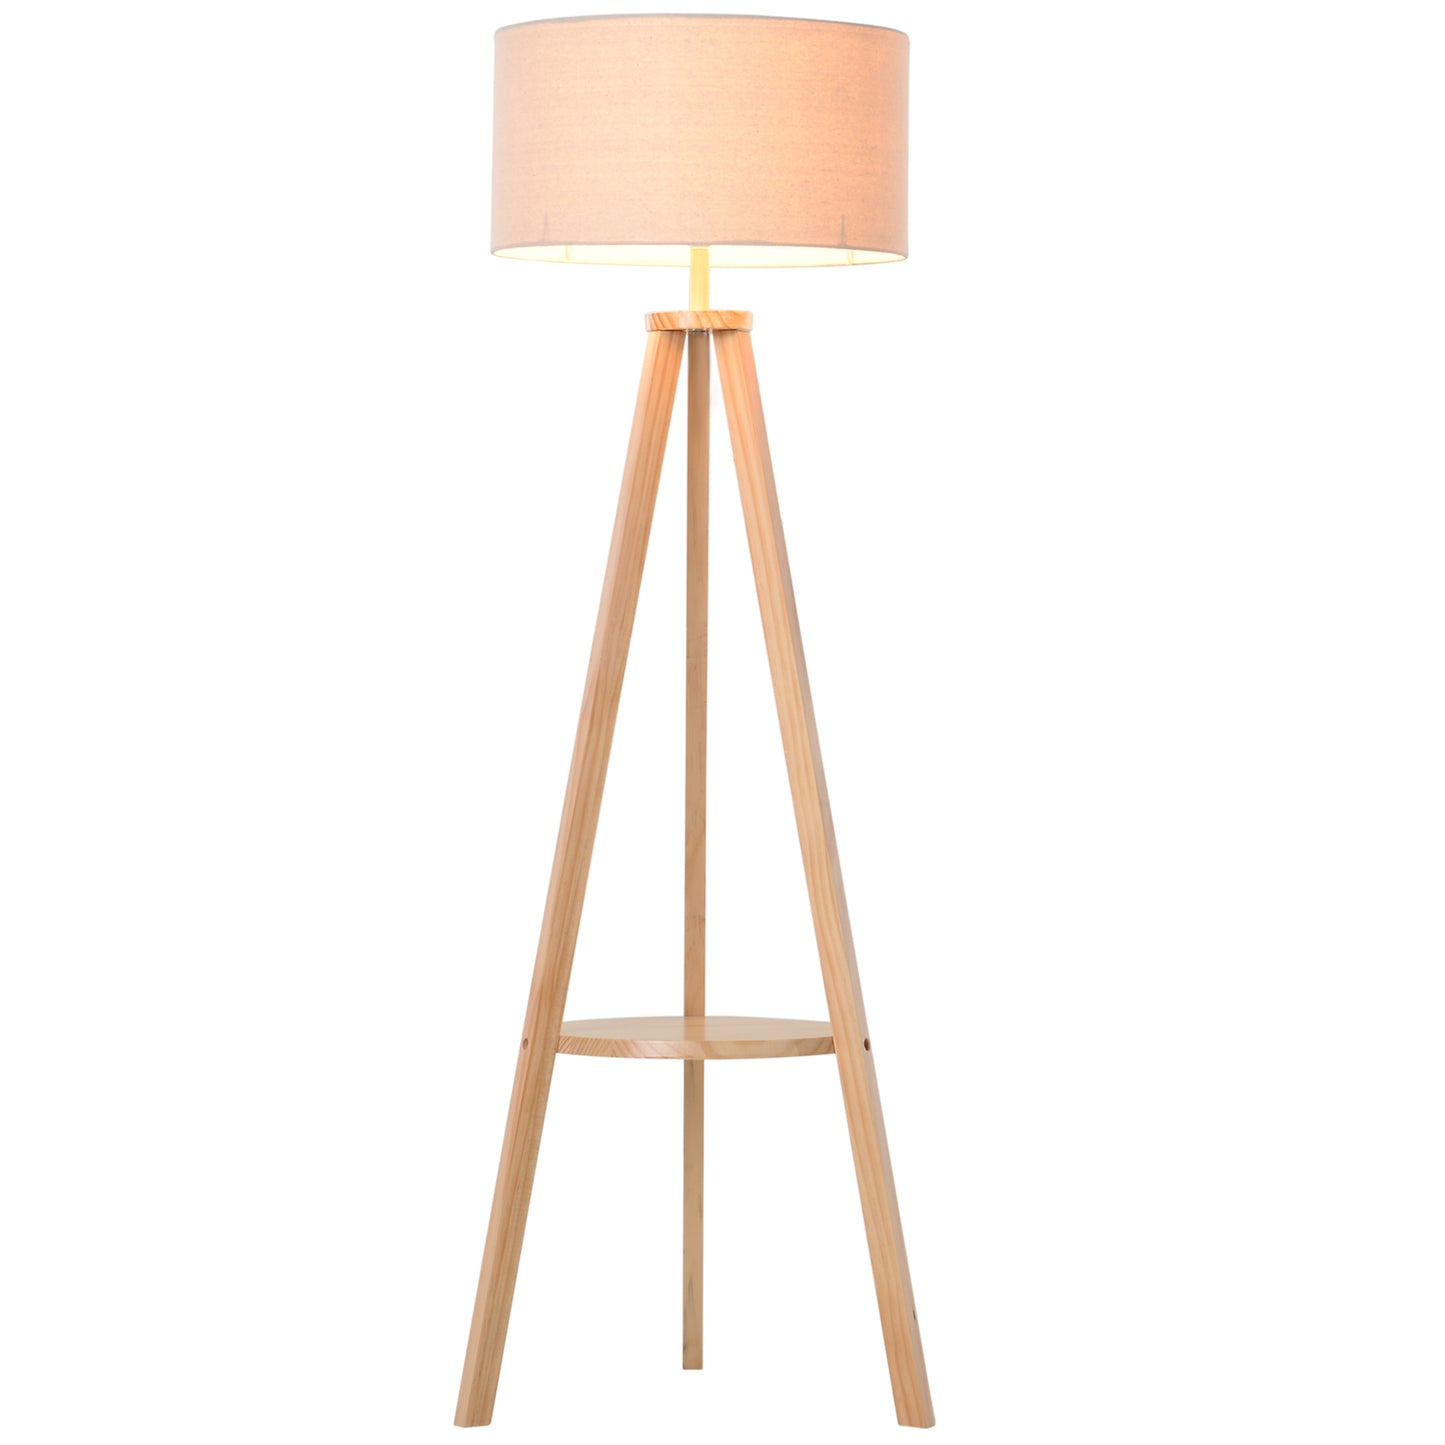 HOMCOM Free Standing Floor Lamp,  50Lx50Wx154H cm-Beige/Natural Wood Colour